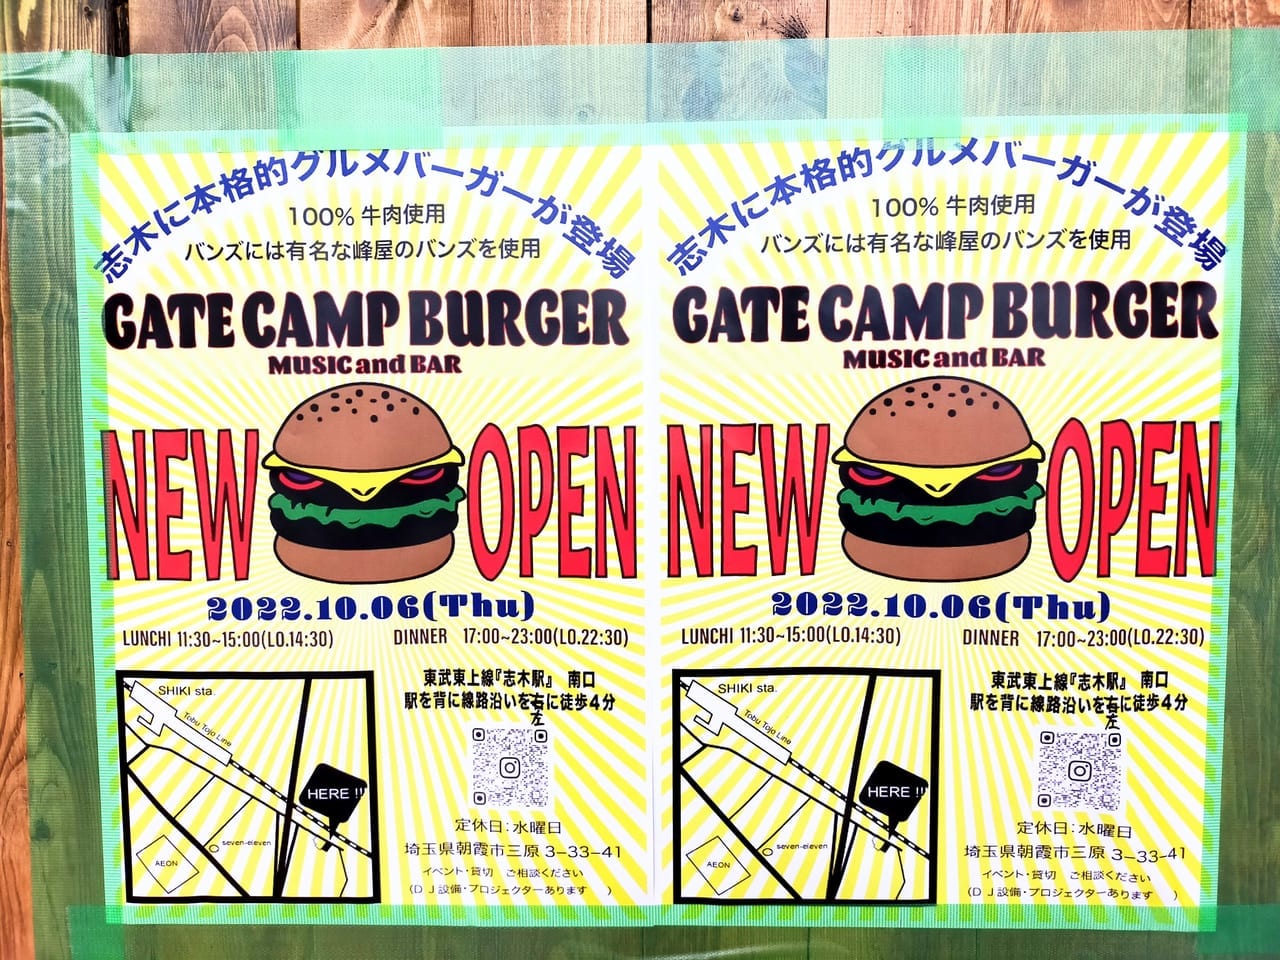 GATE CAMP BURGER